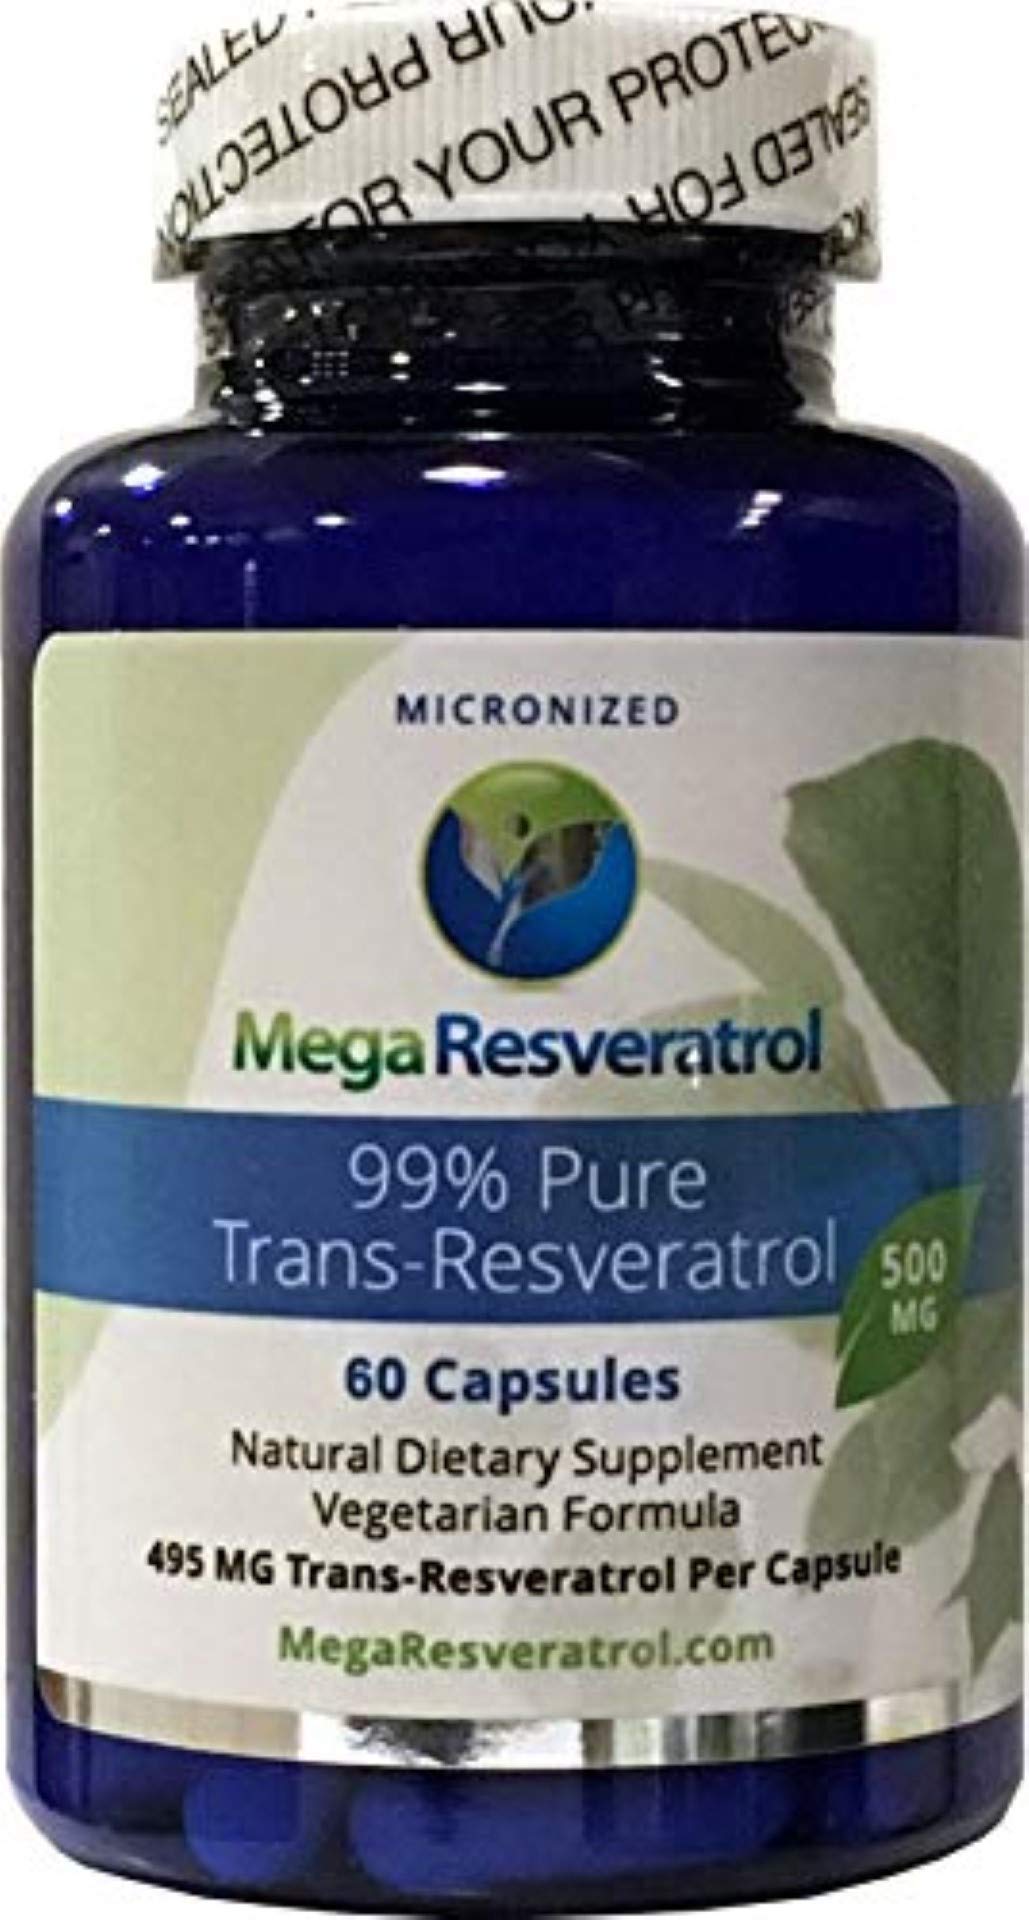 Mega Resveratrol, Pharmaceutical Grade,99% Pure, Isolate, Micronized Trans-Resveratrol, 60 Veggie Caps, 500mg per Capsule. Purity Certified. Absolu...